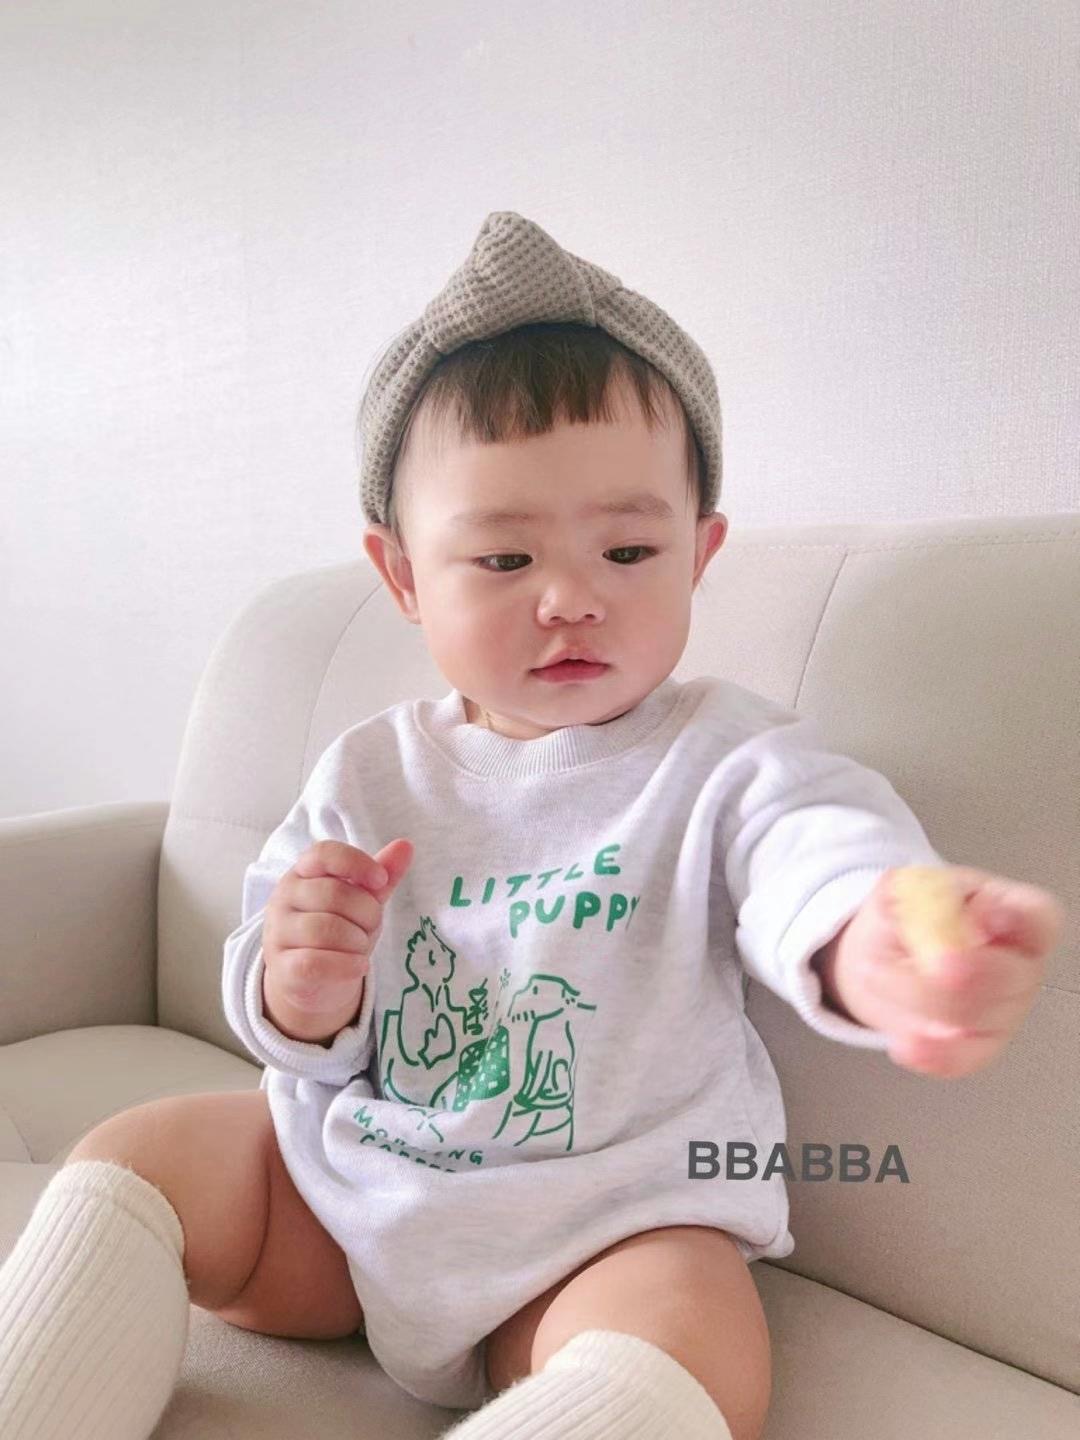 BBABBA 韓國嬰兒連身衣